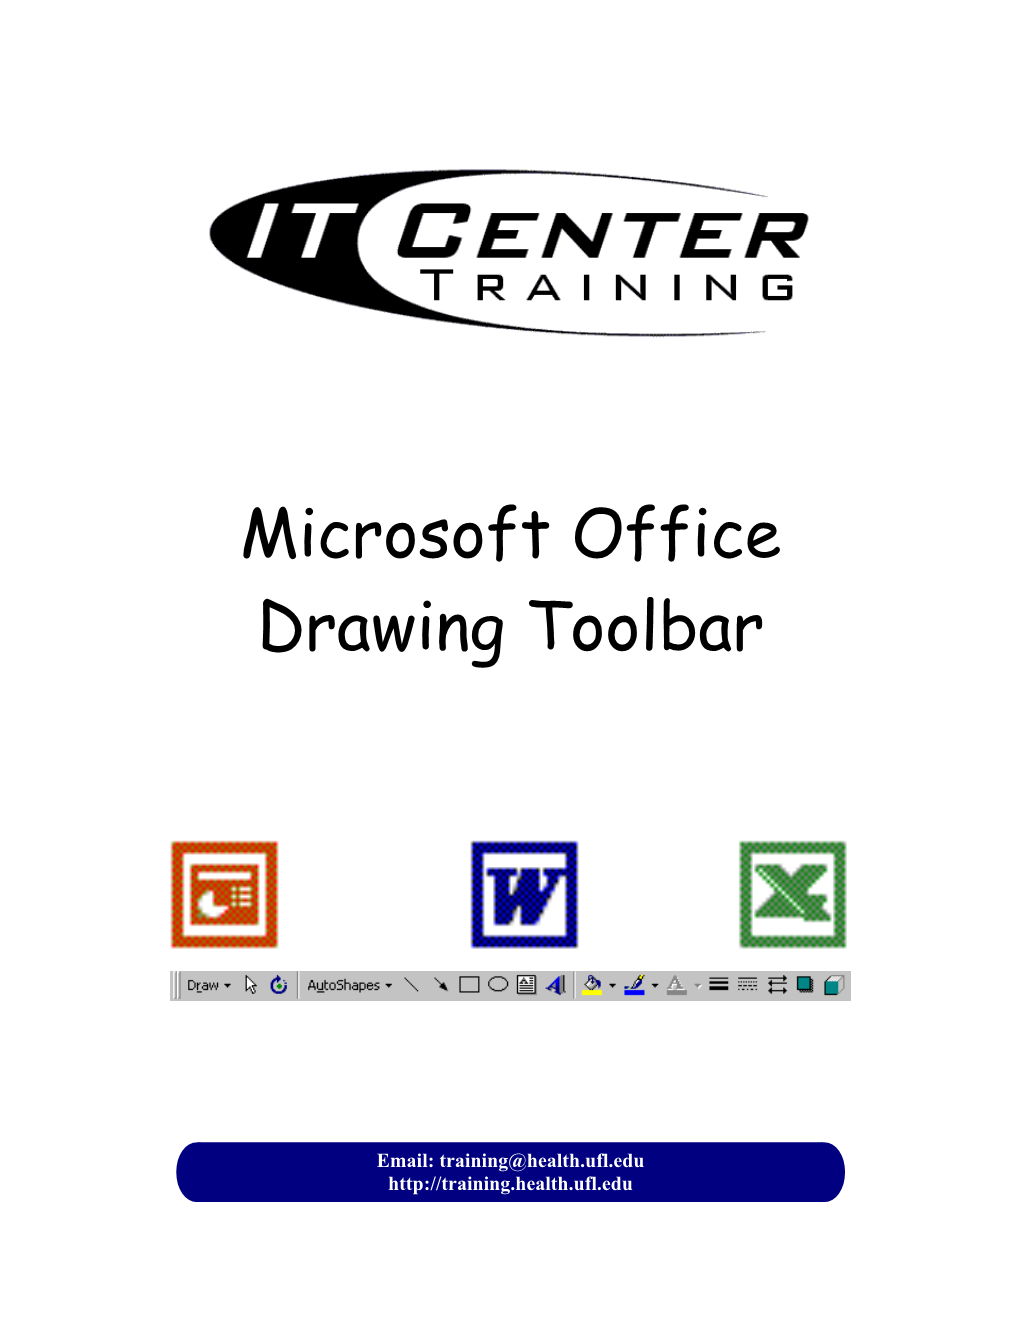 Microsoft Office: Drawing Toolbar